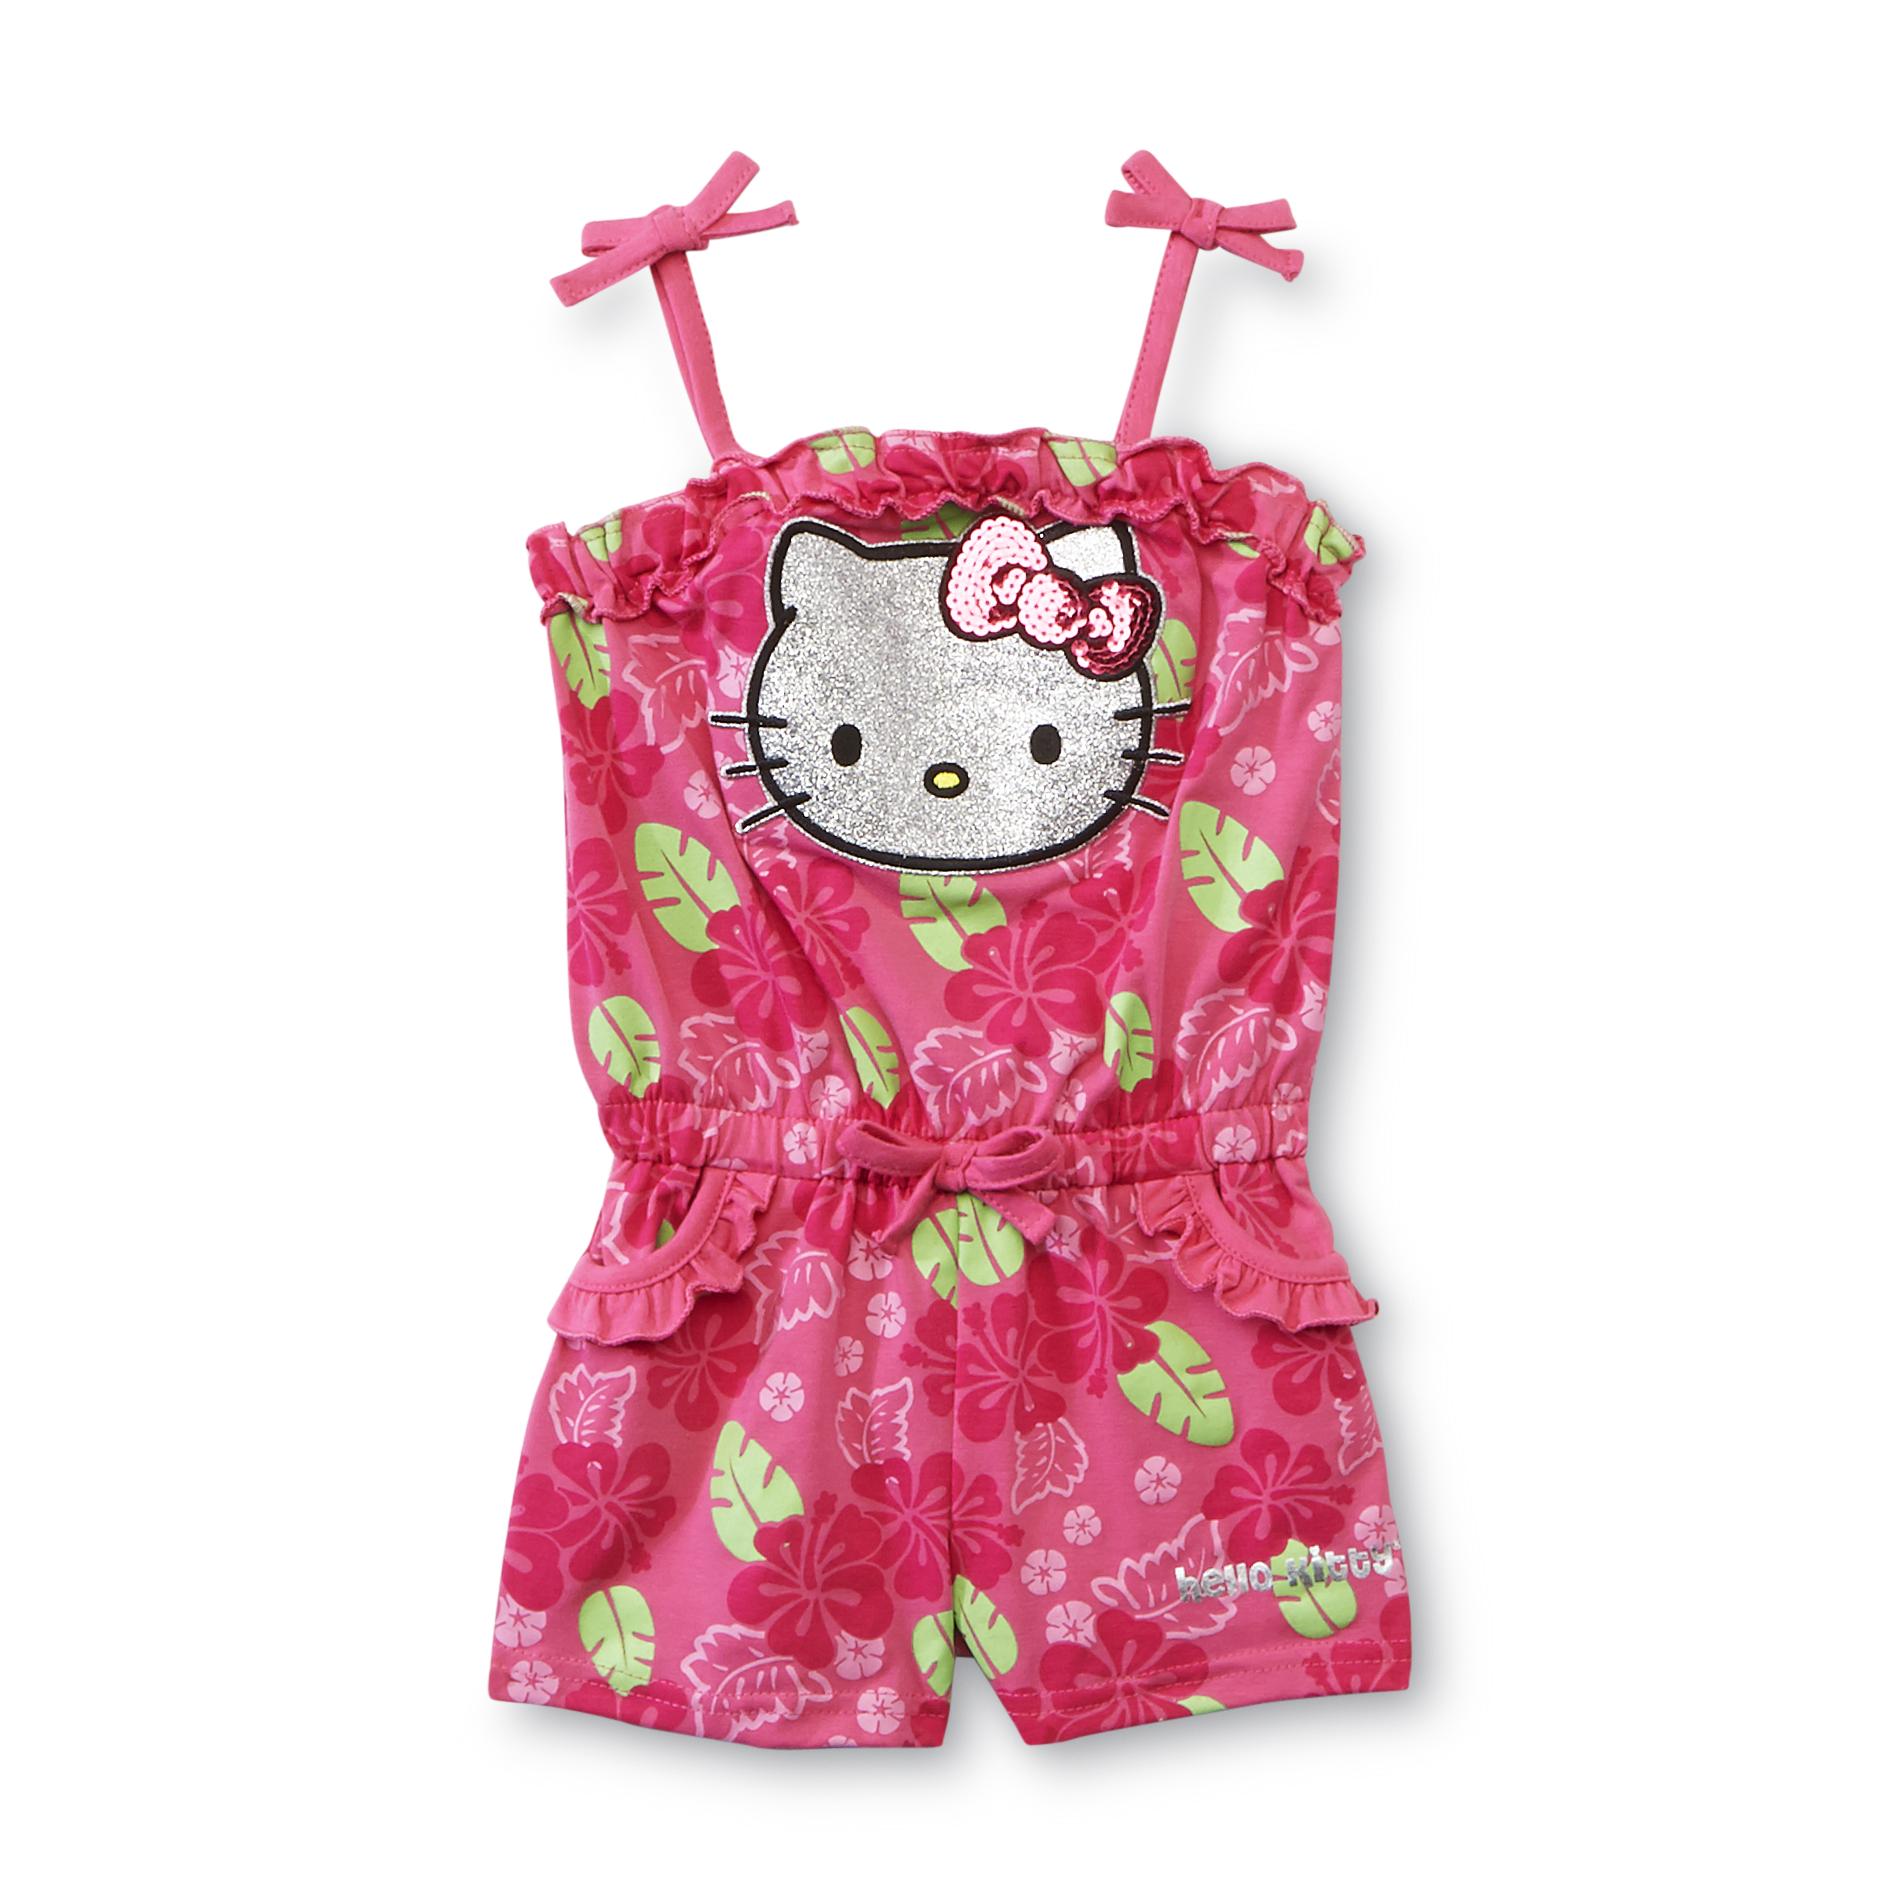 Hello Kitty Toddler Girl's Romper - Floral